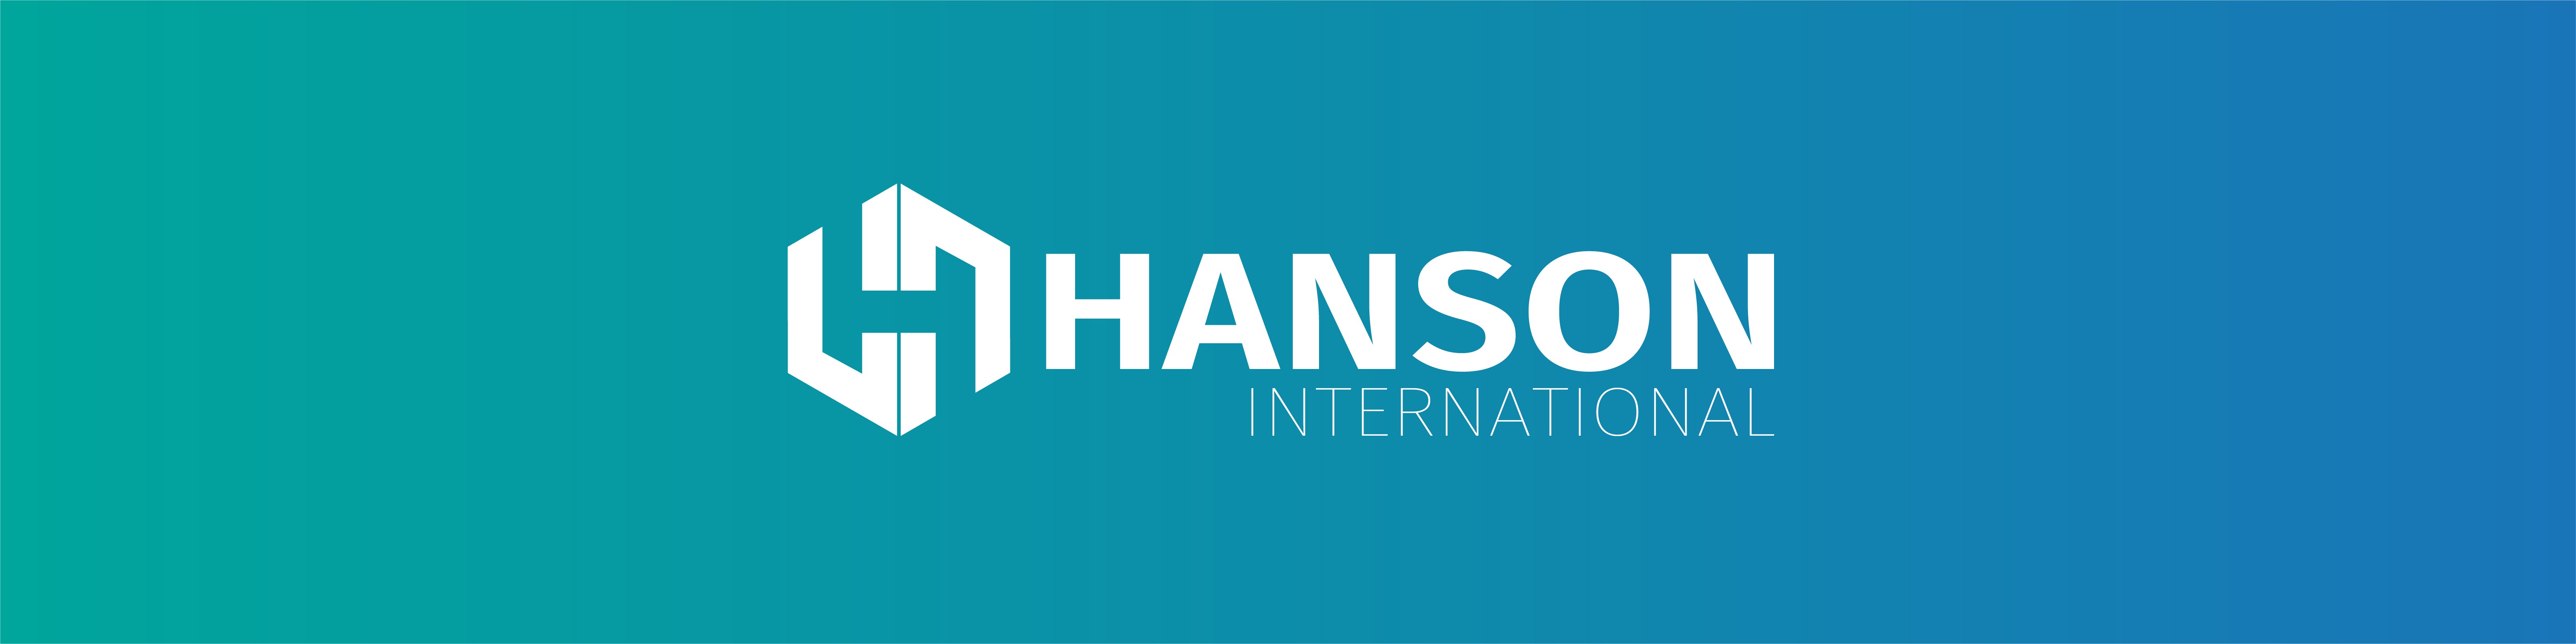 HANSON International | LinkedIn